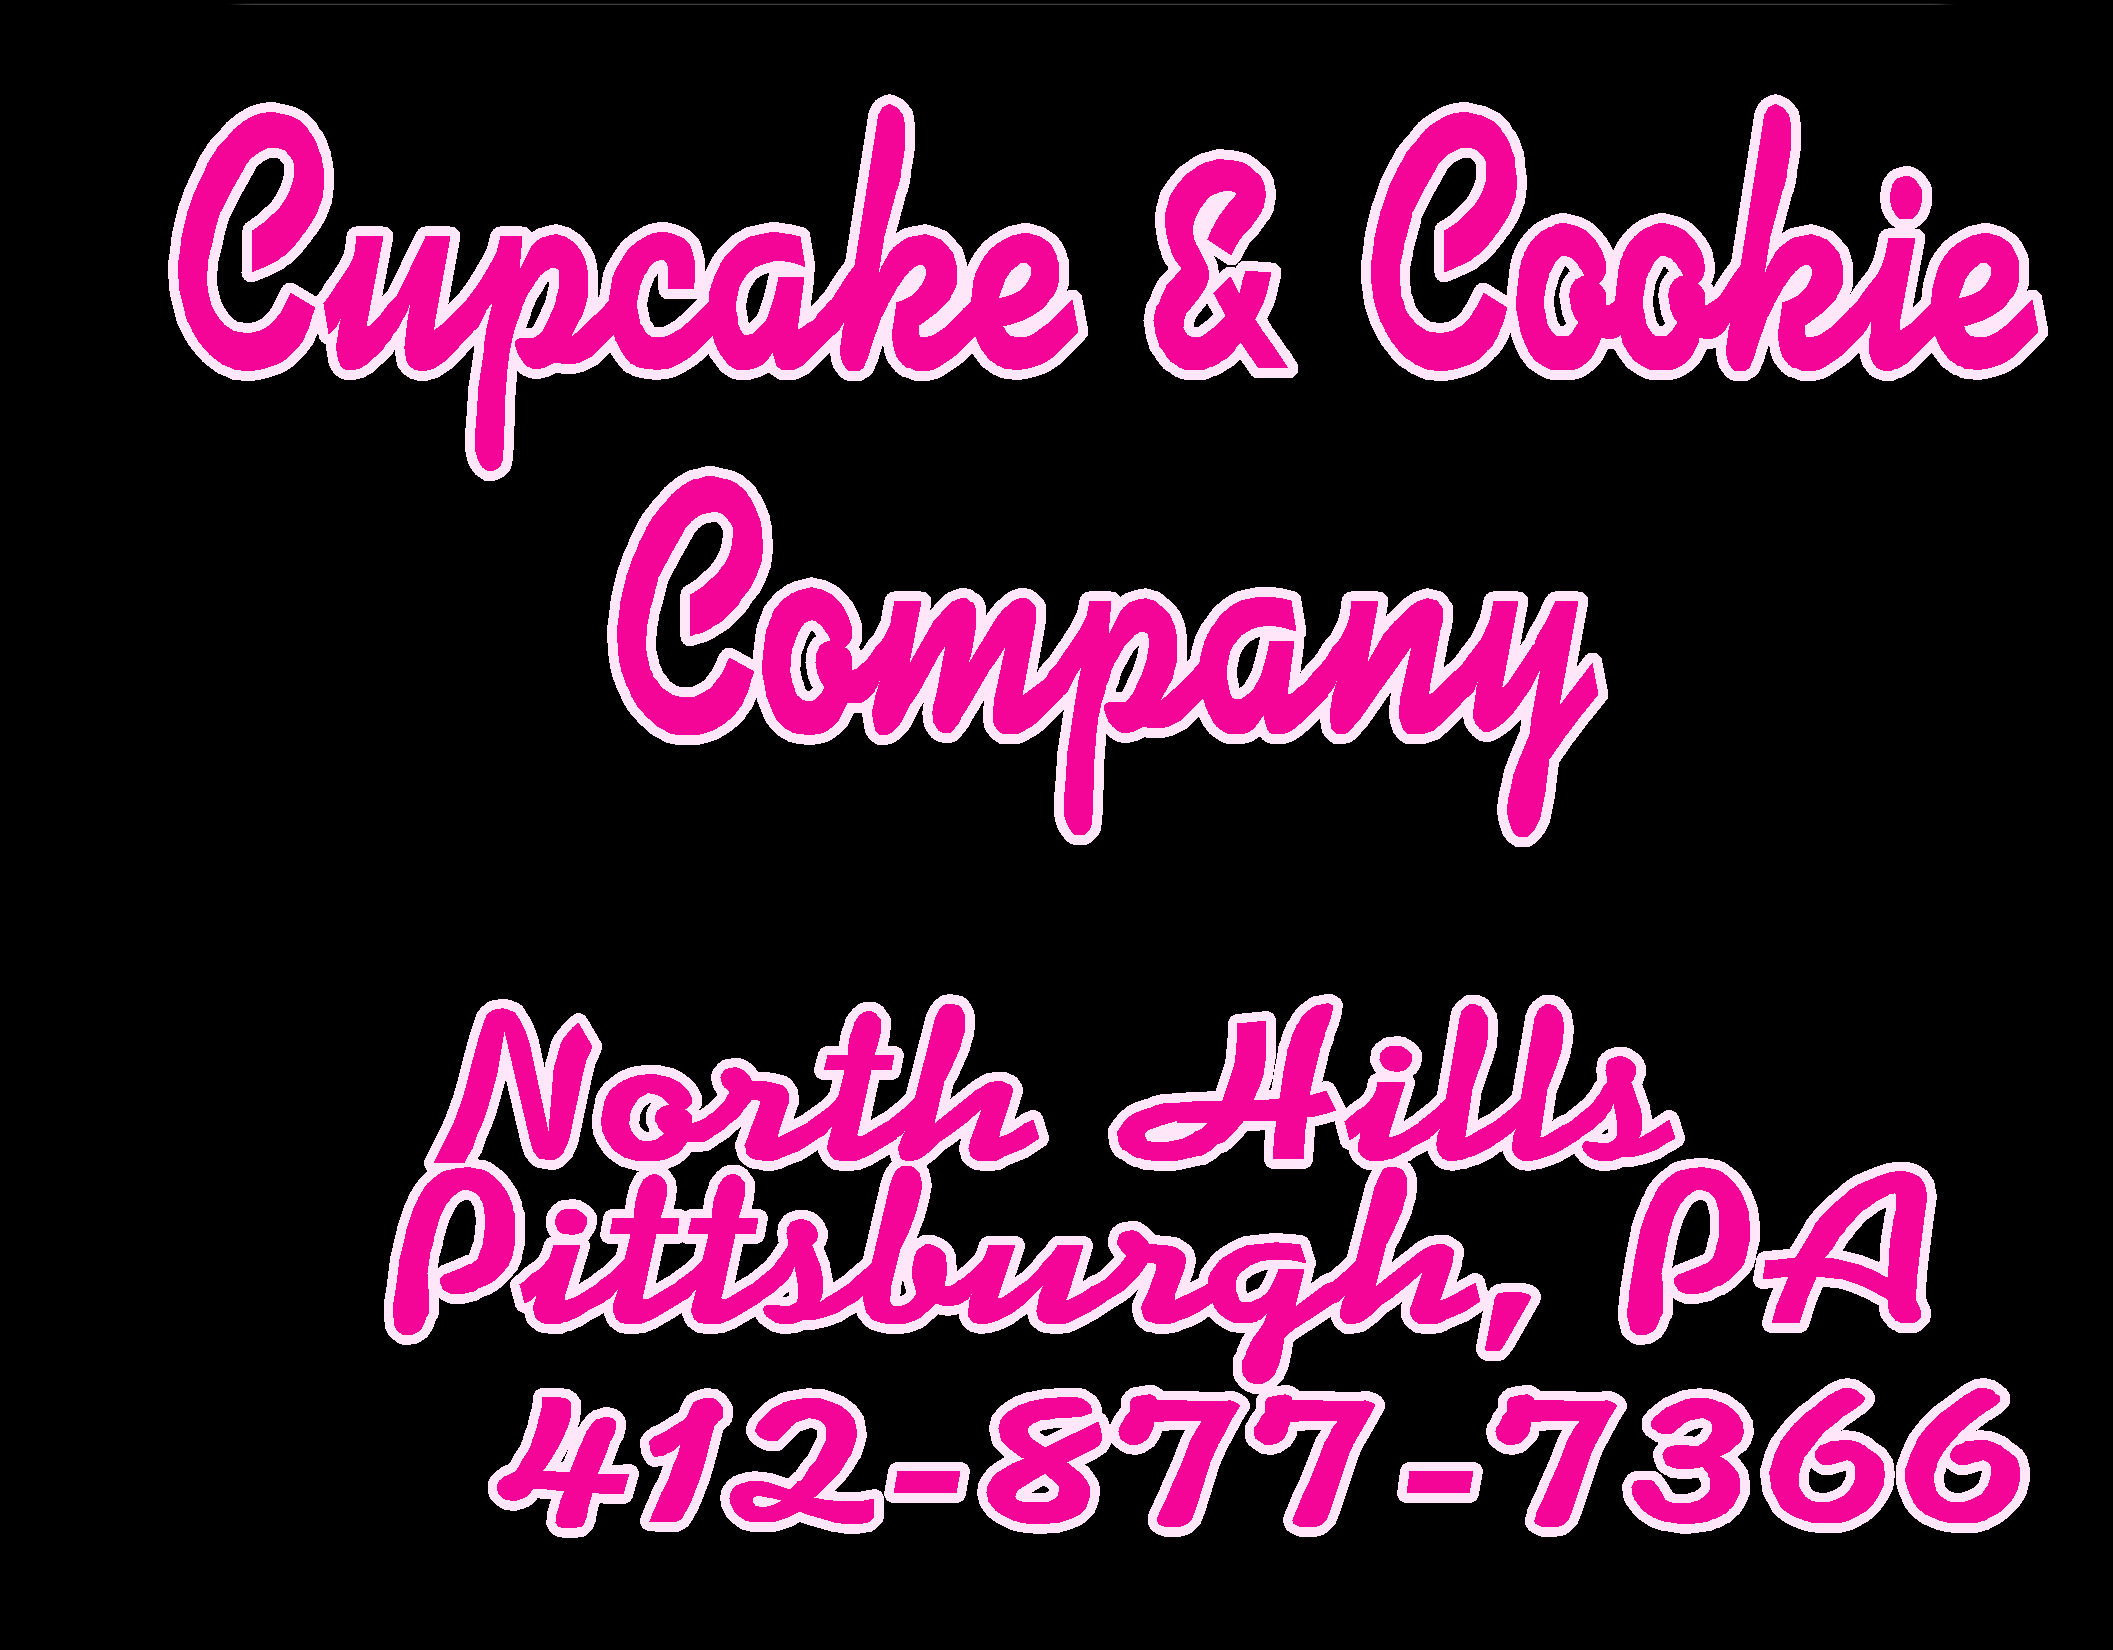 Cupcake & Cookie Co 412-877-7366